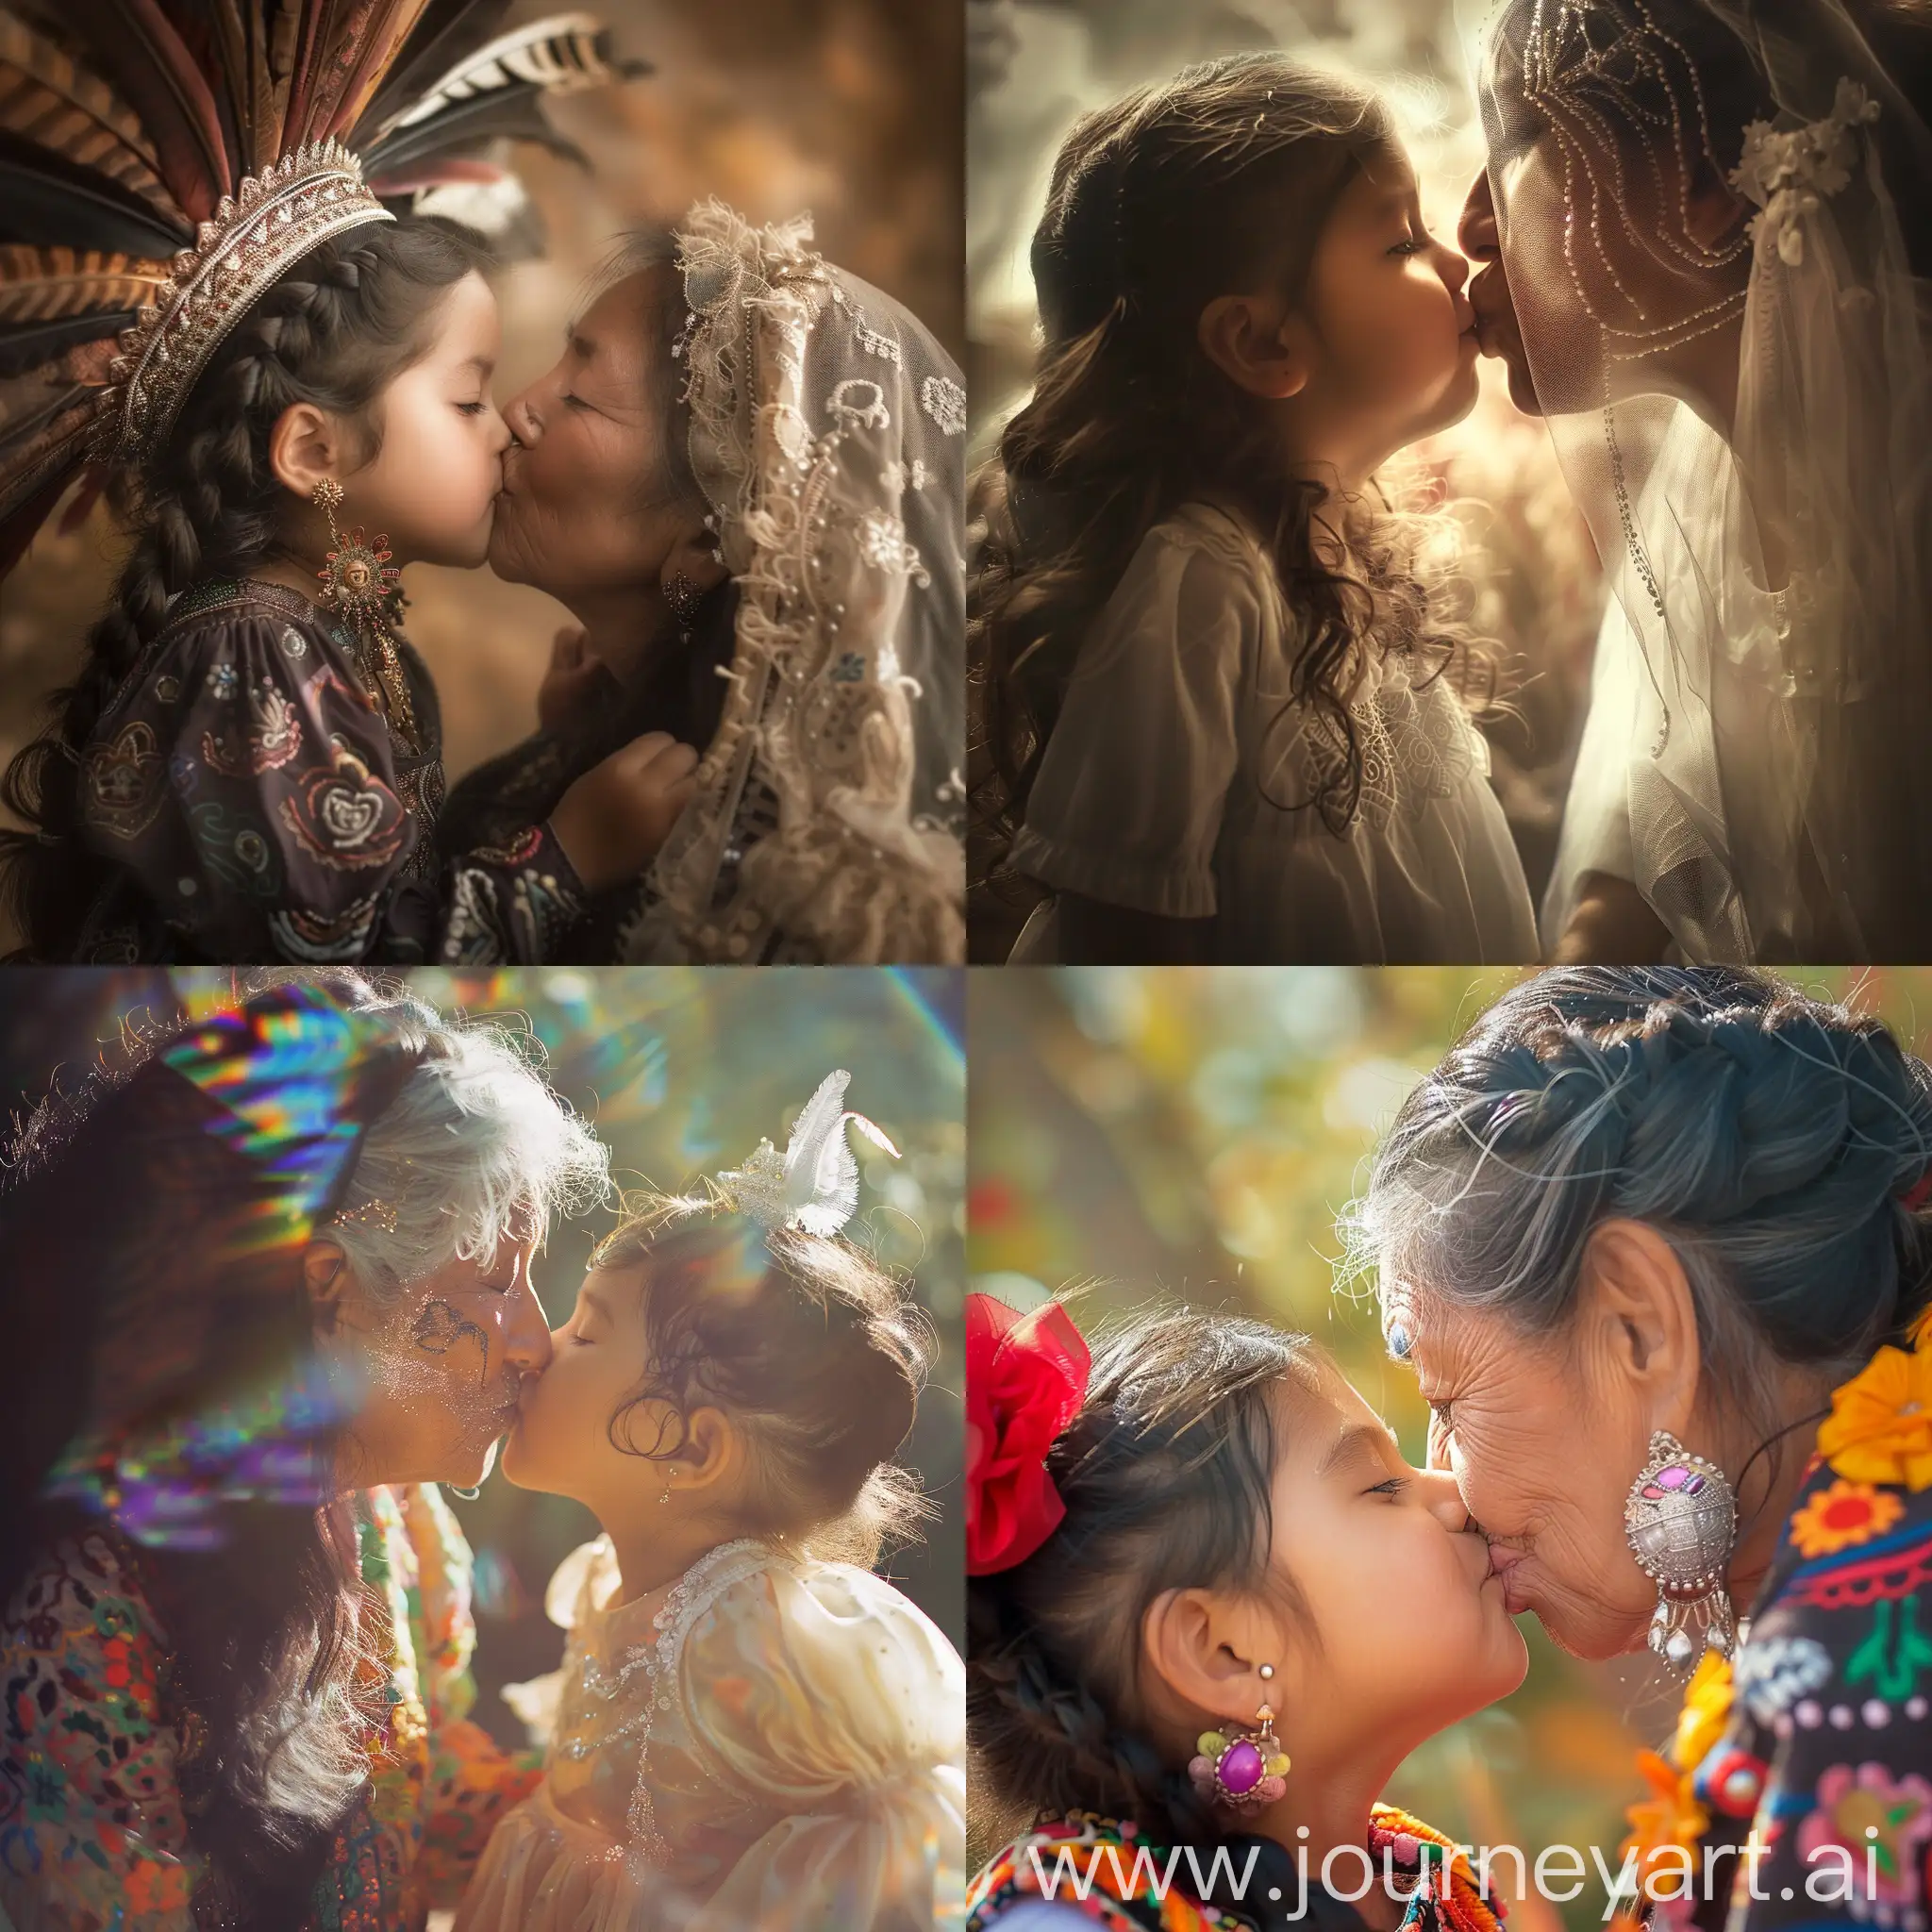 Affectionate-Kiss-Little-Hispanic-Girl-Embraced-by-Her-Spirit-Mother